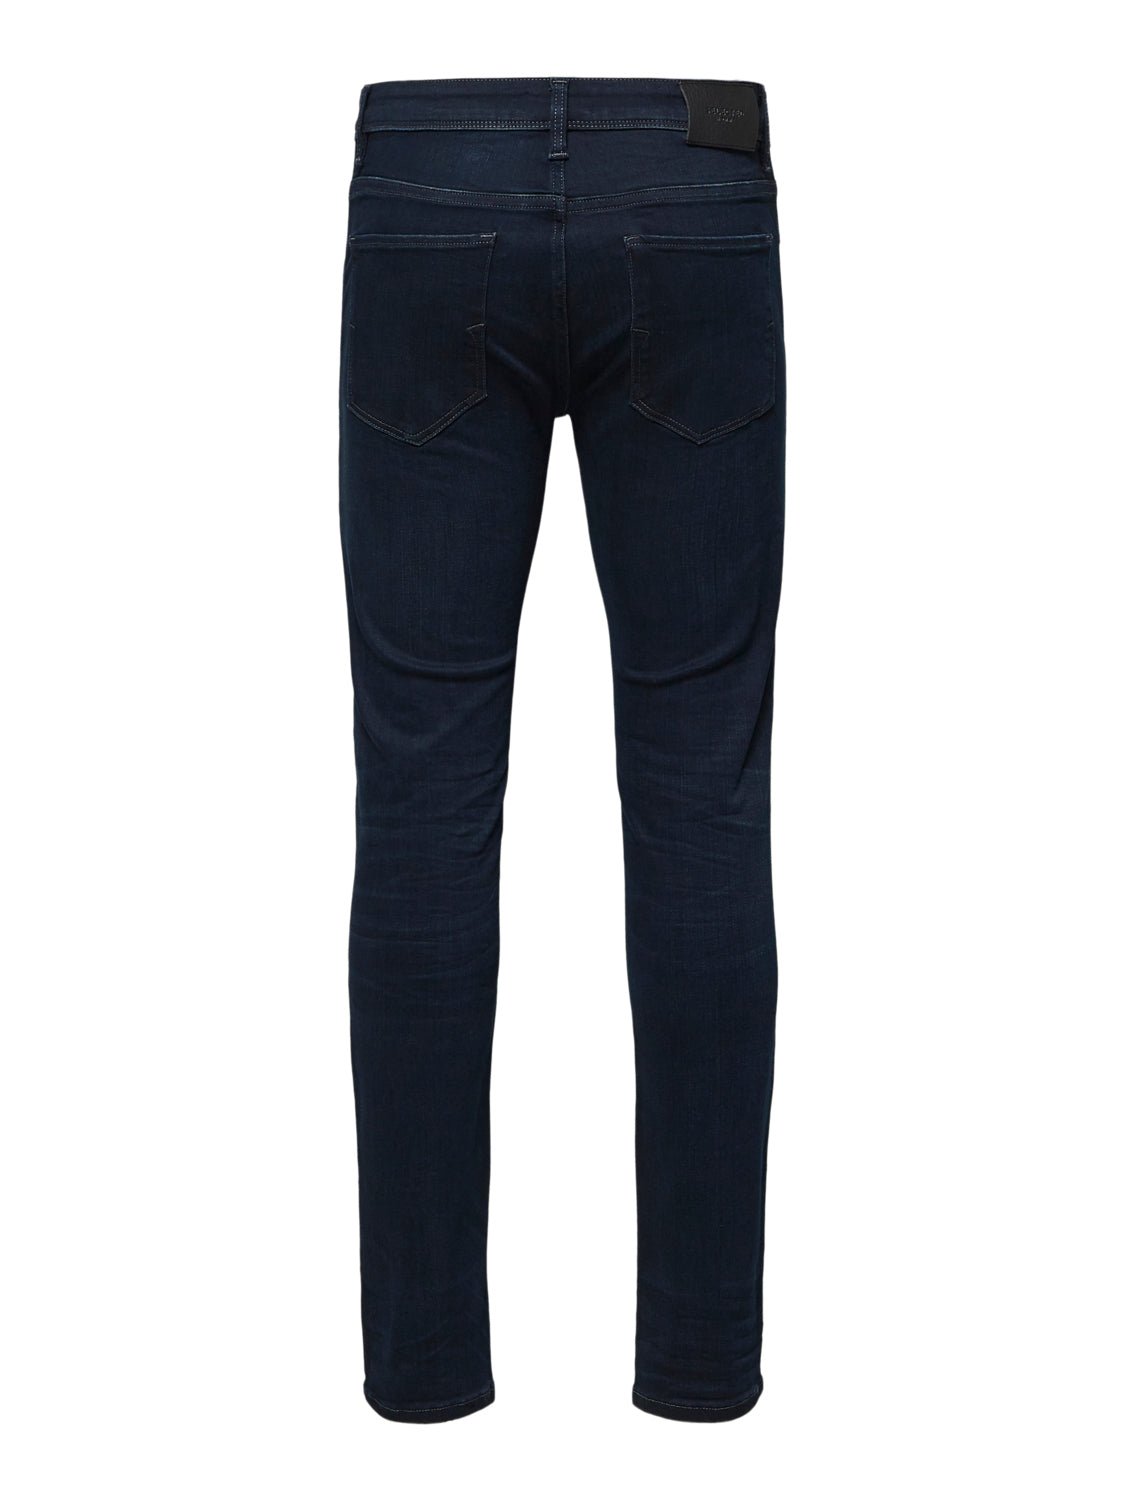 SELECTED HOMME - SLIM-LEON Jeans - Blue Black Denim